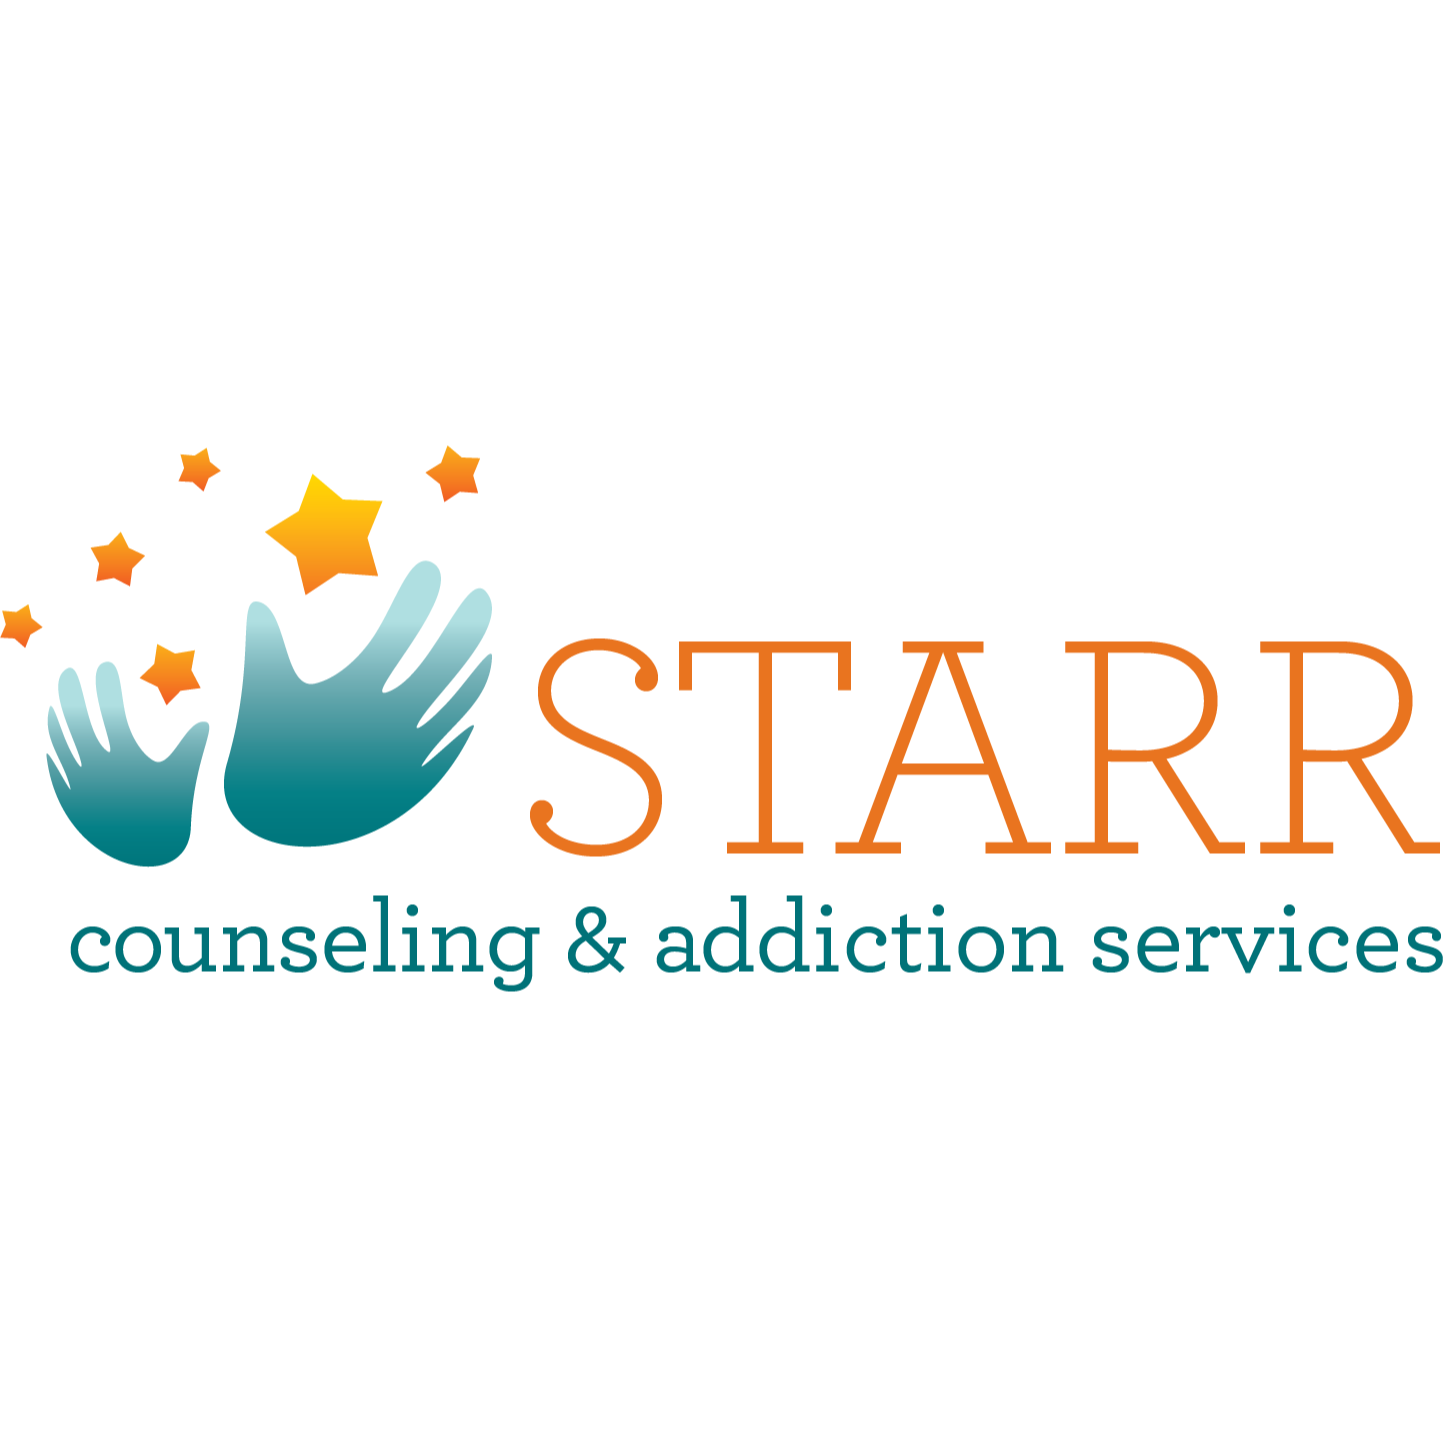 Starr Counseling & Addiction Services - Missoula, MT 59801 - (406)544-0432 | ShowMeLocal.com